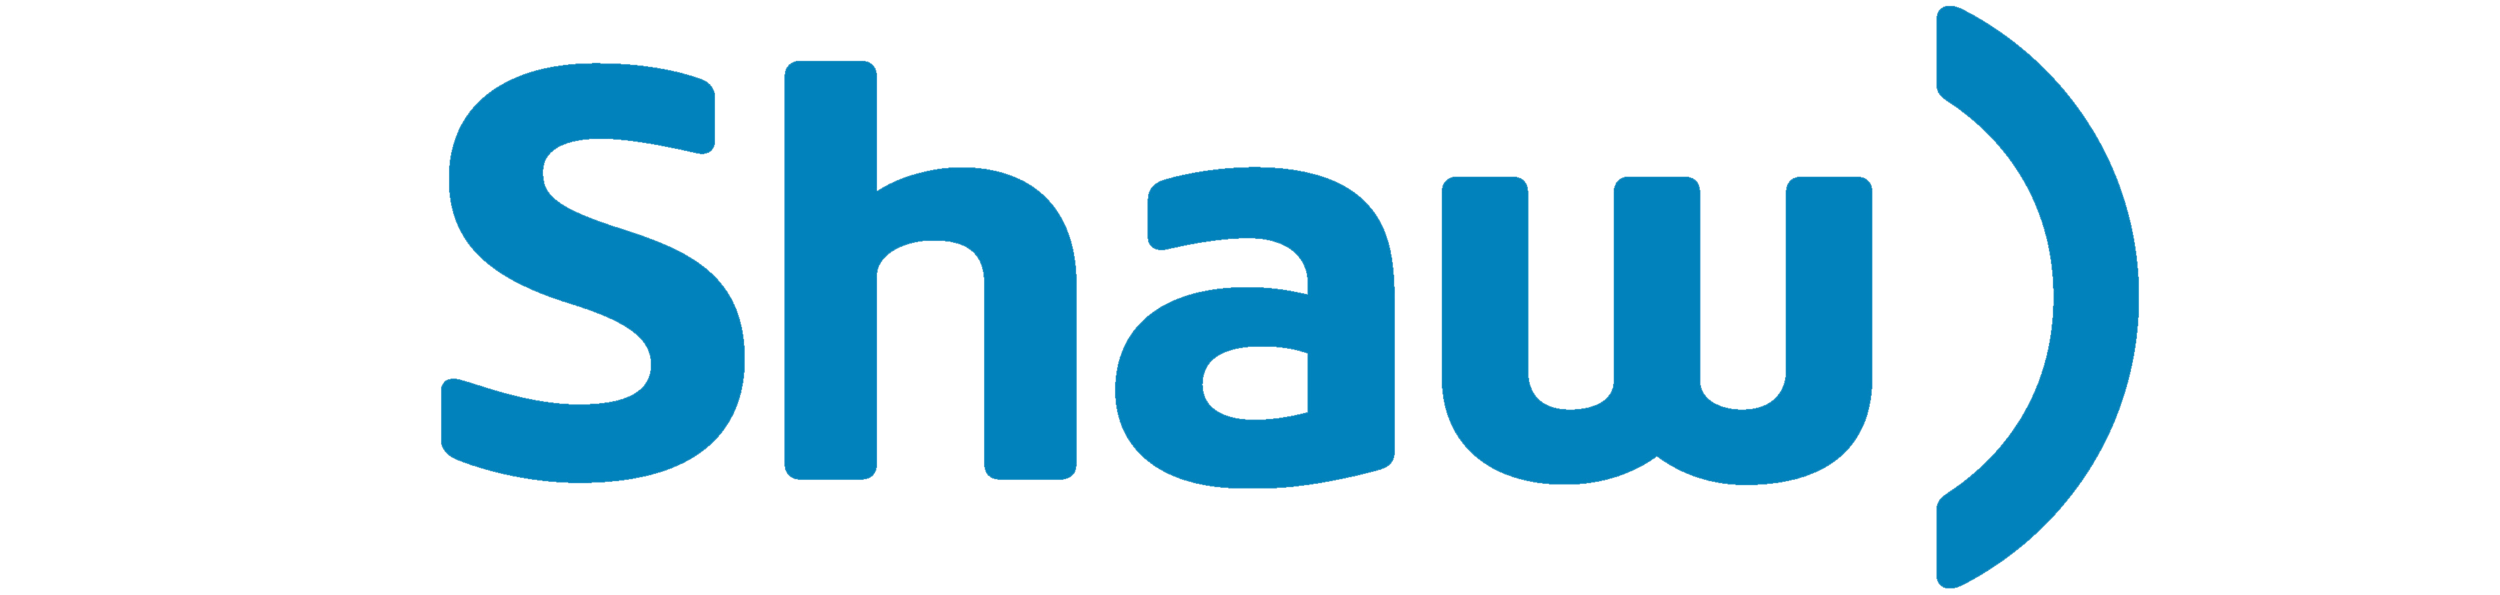 Shaw-Logo_1.png